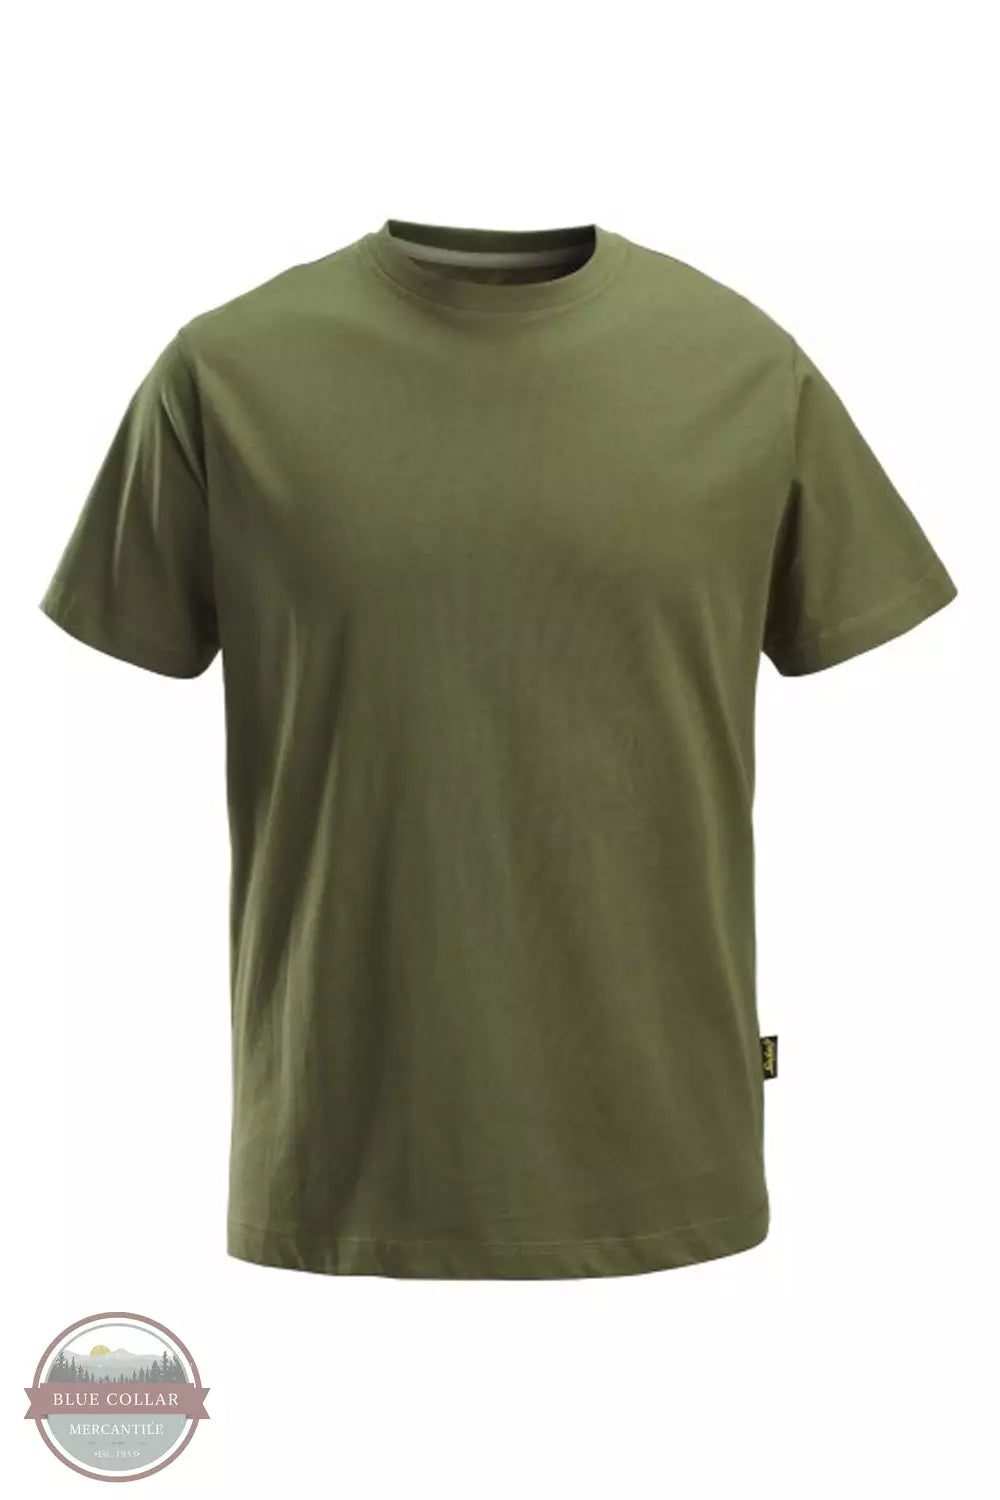 Snicker's Workwear 1361310 Classic Short Sleeve T-Shirt Khaki Green Frontn View